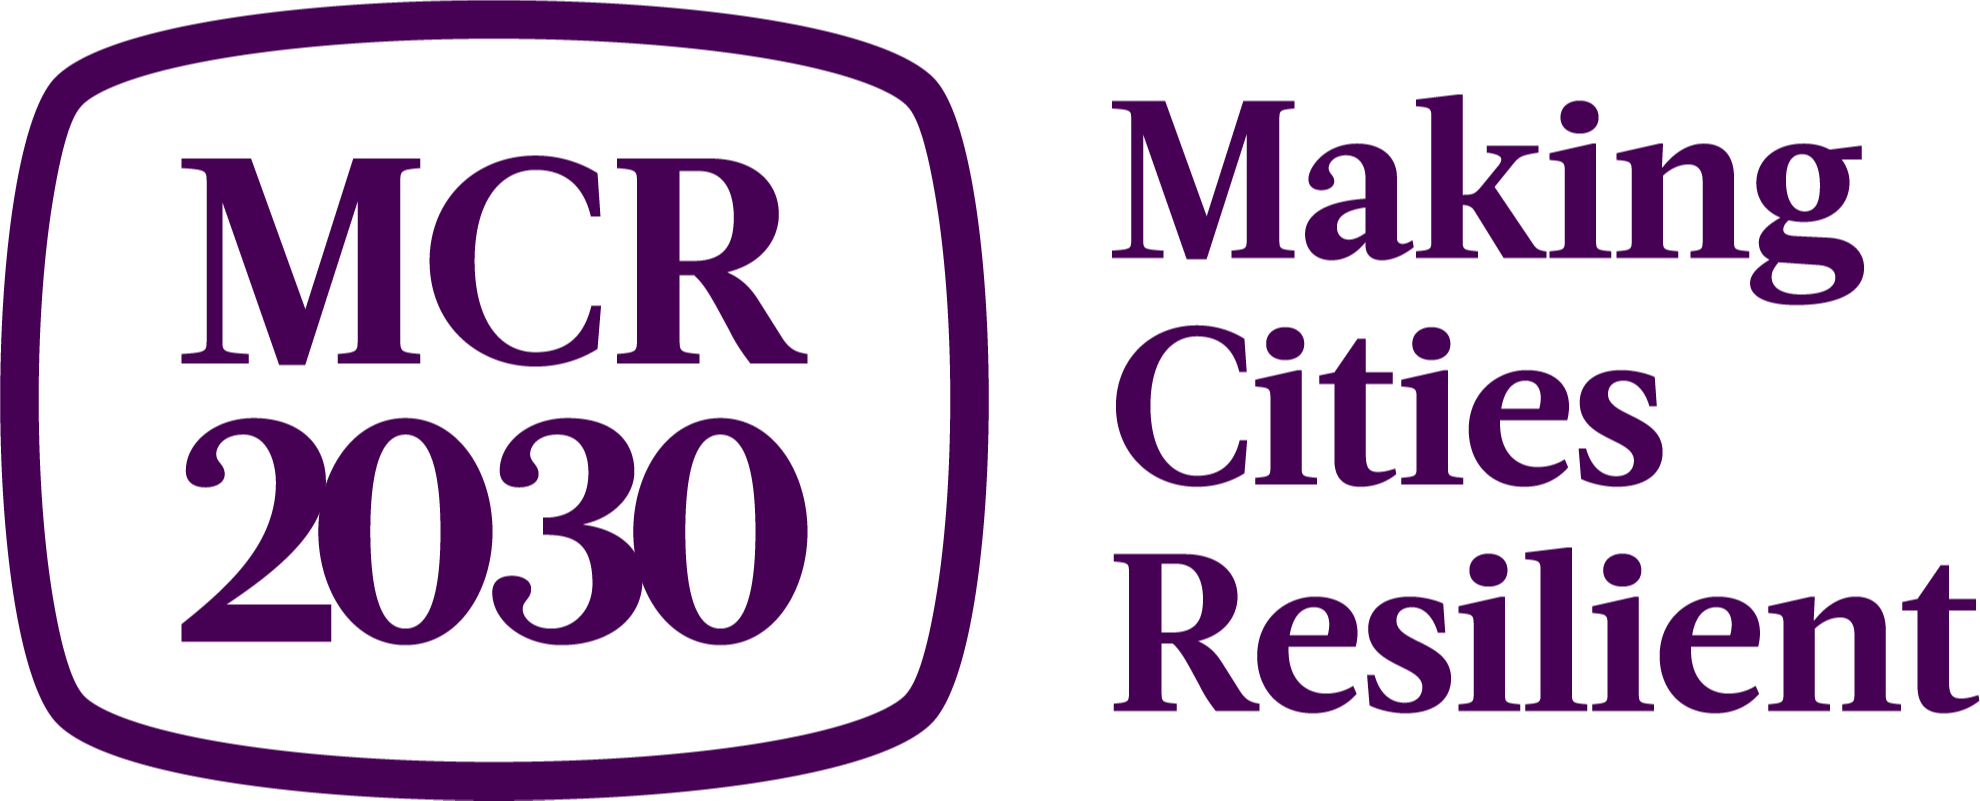 Logo MCR 2030